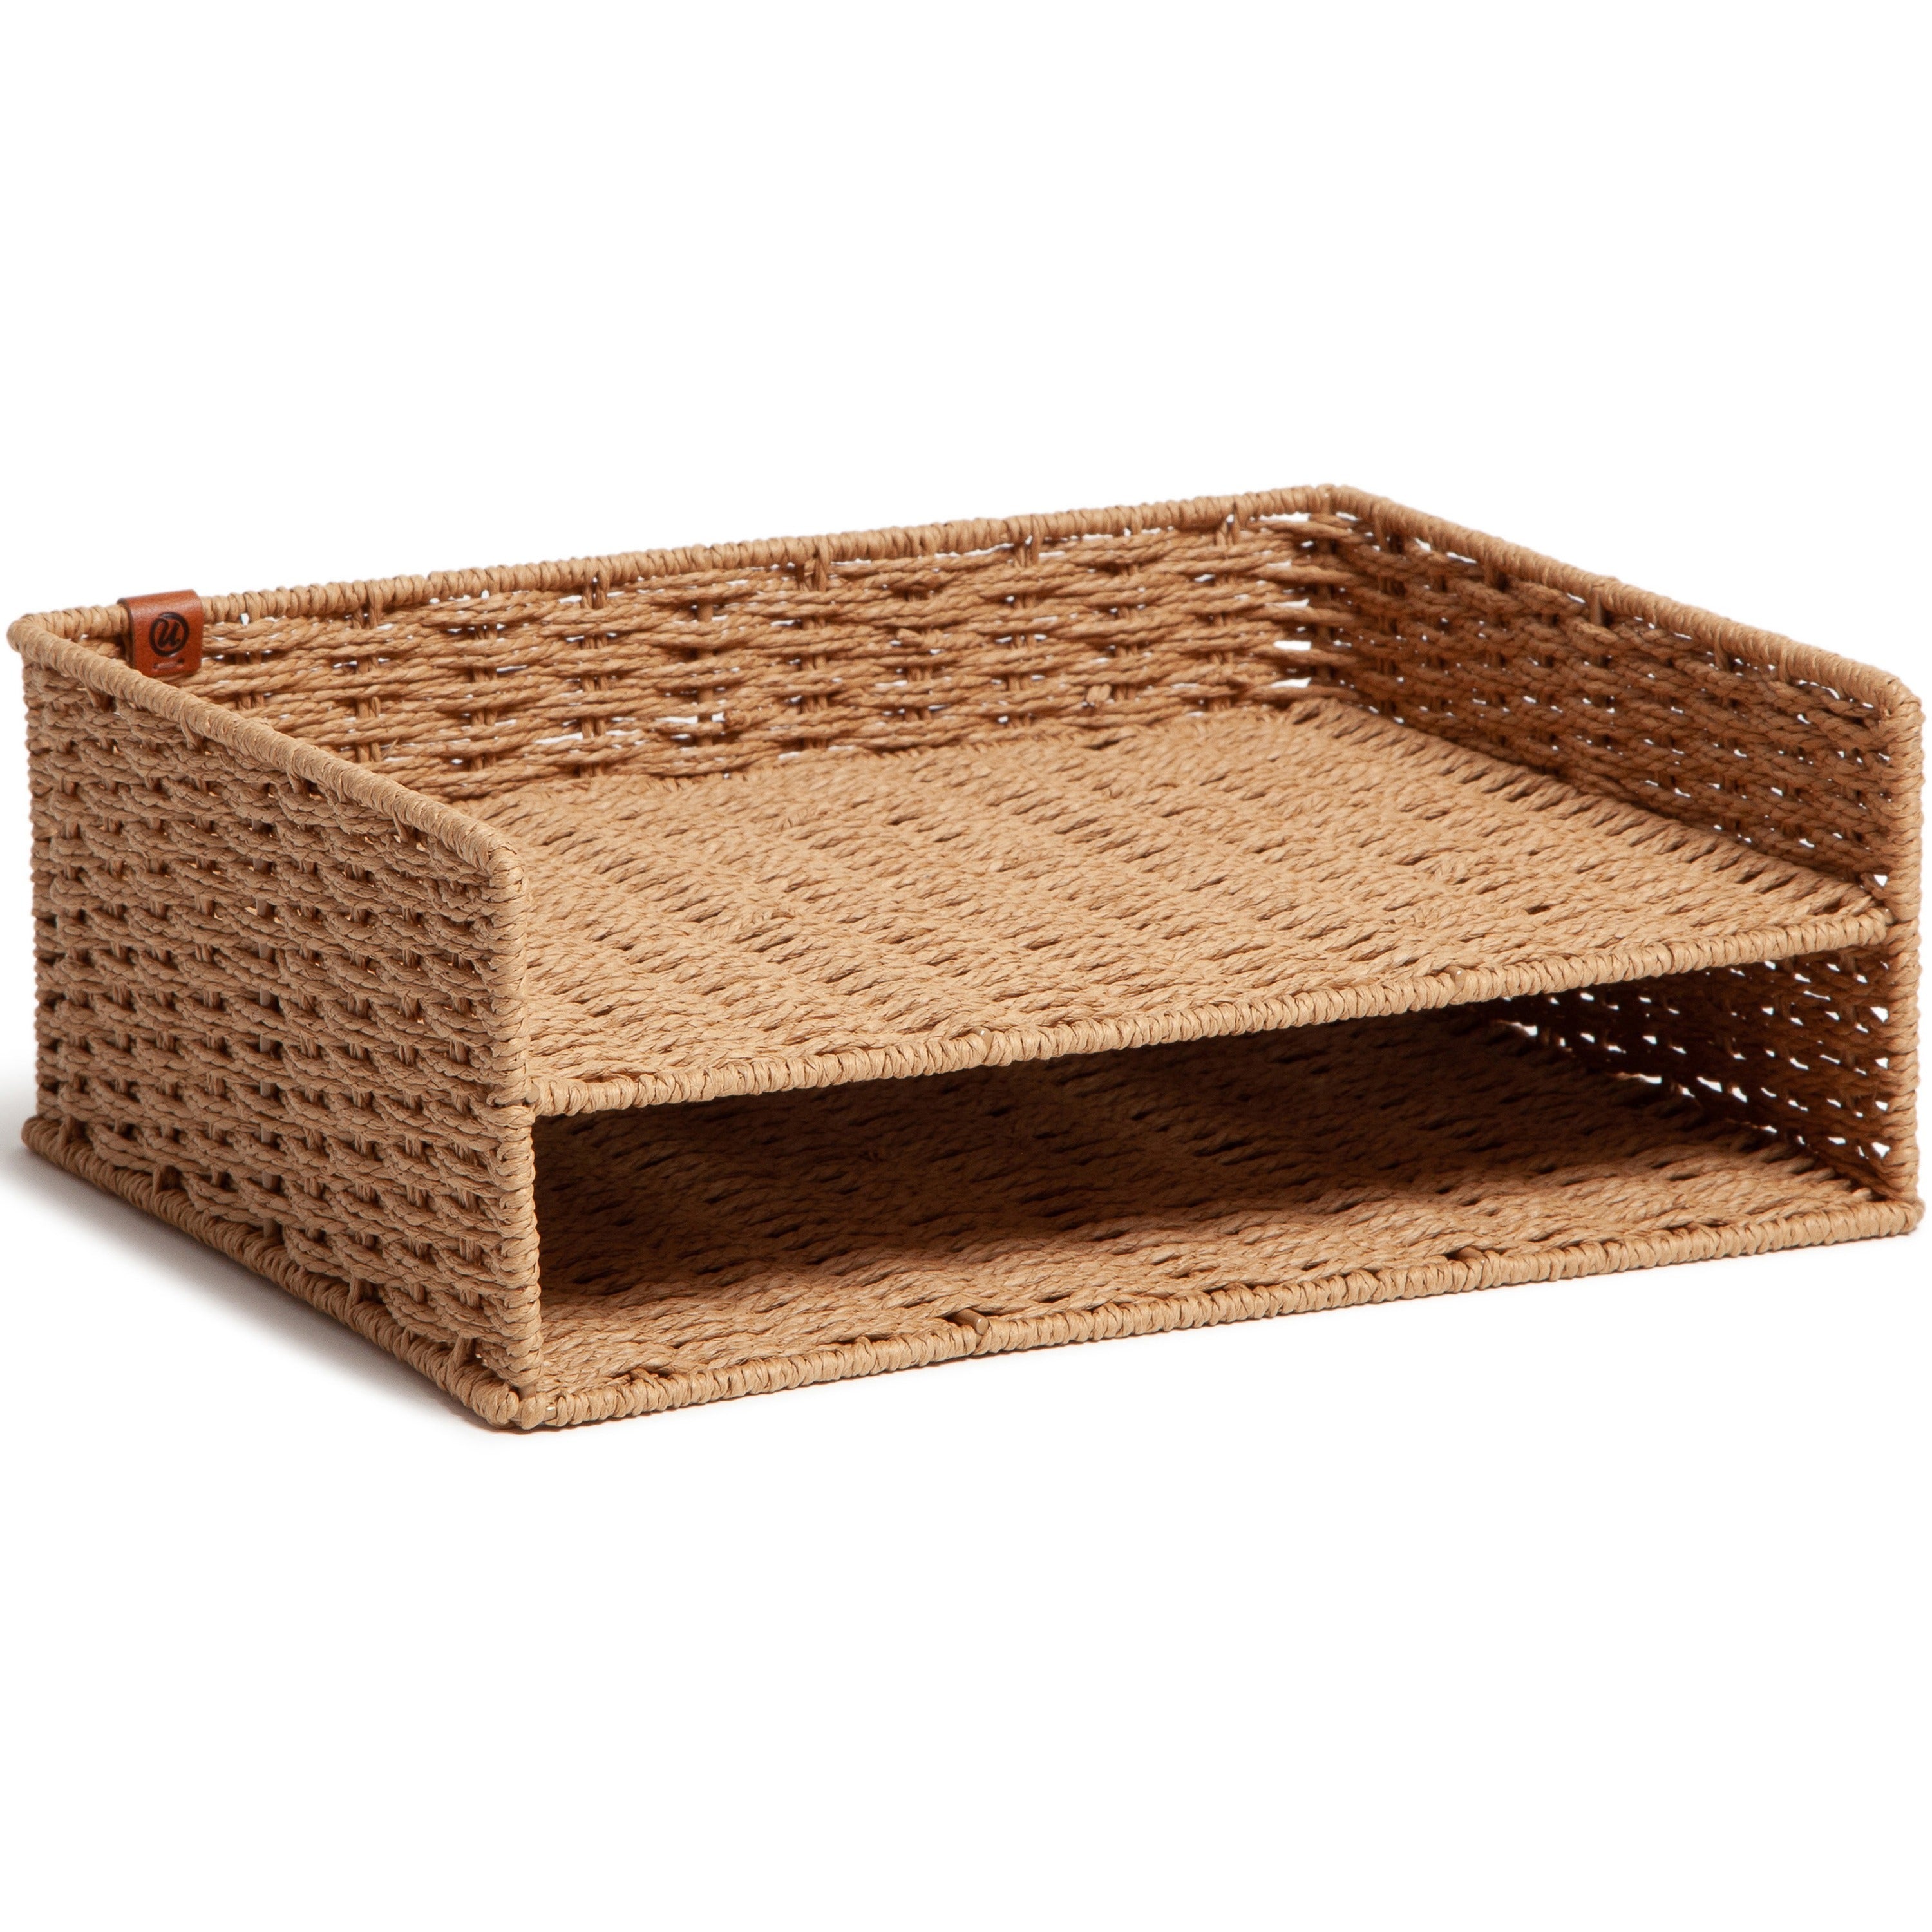 u-brands-woven-paper-tray-sturdy-brown-1-each_ubr6085u0106 - 1